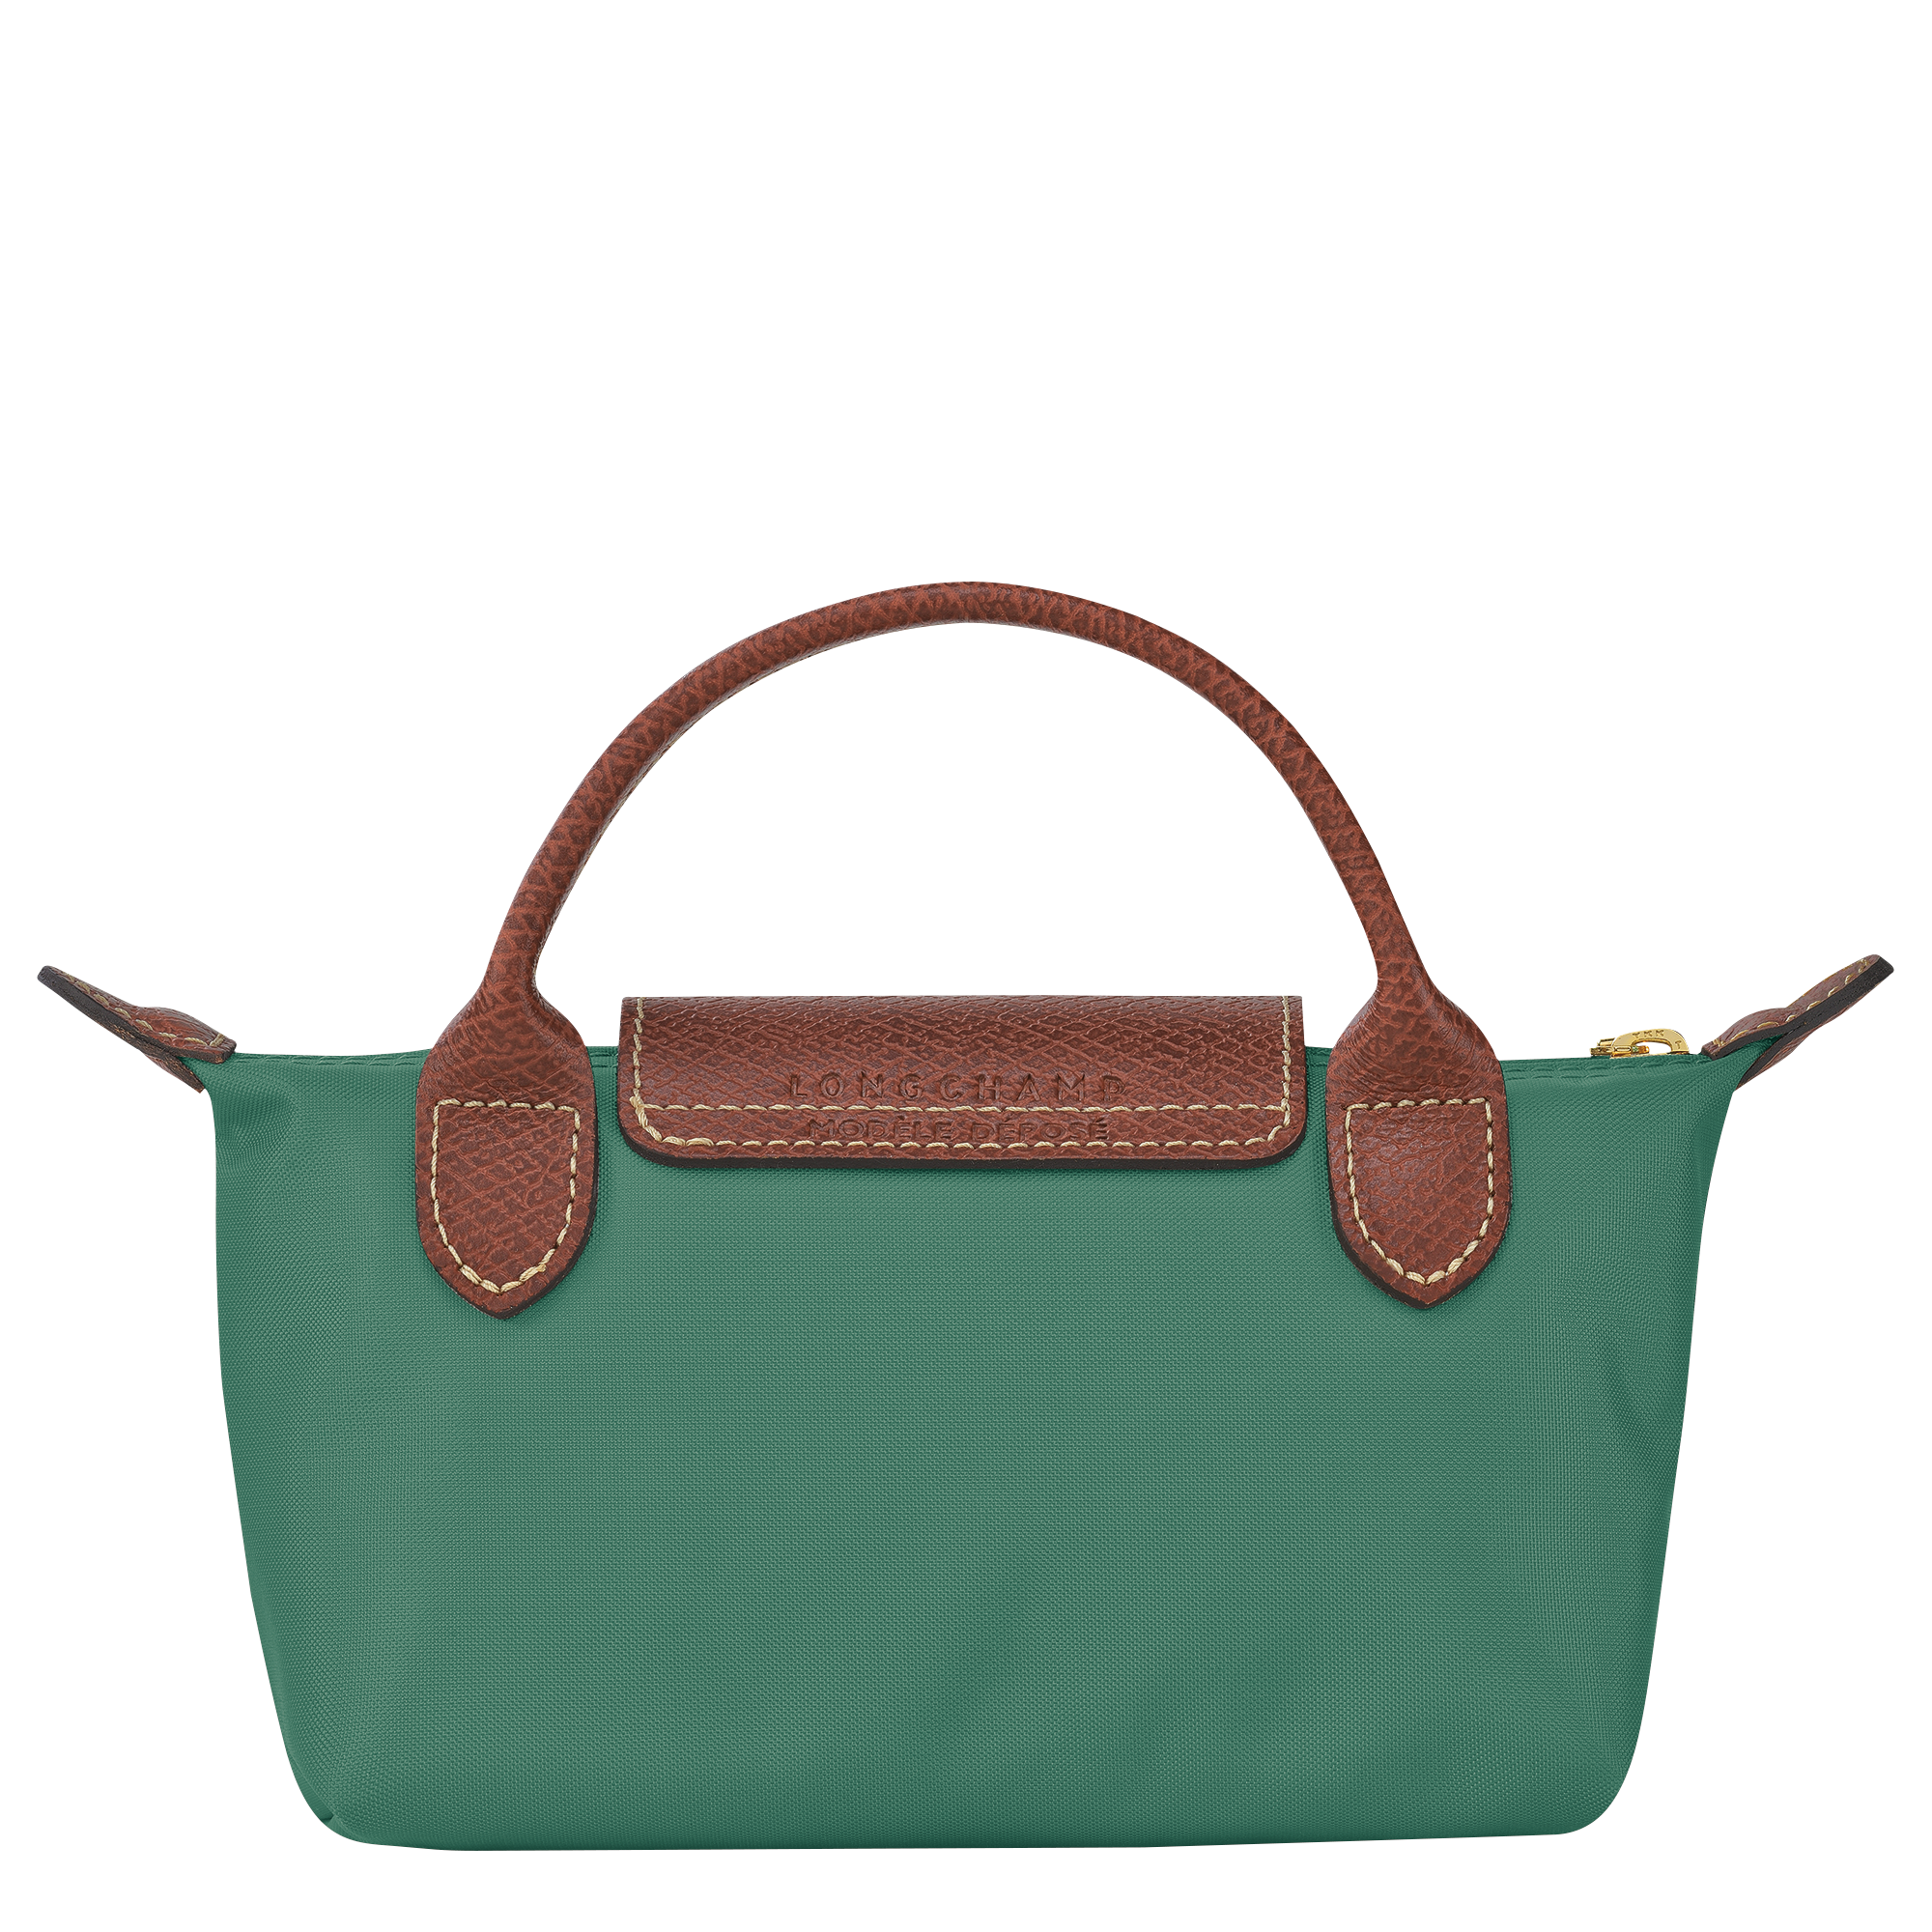 Le Pliage 原創系列 附提把的小袋子, 鼠尾草綠色